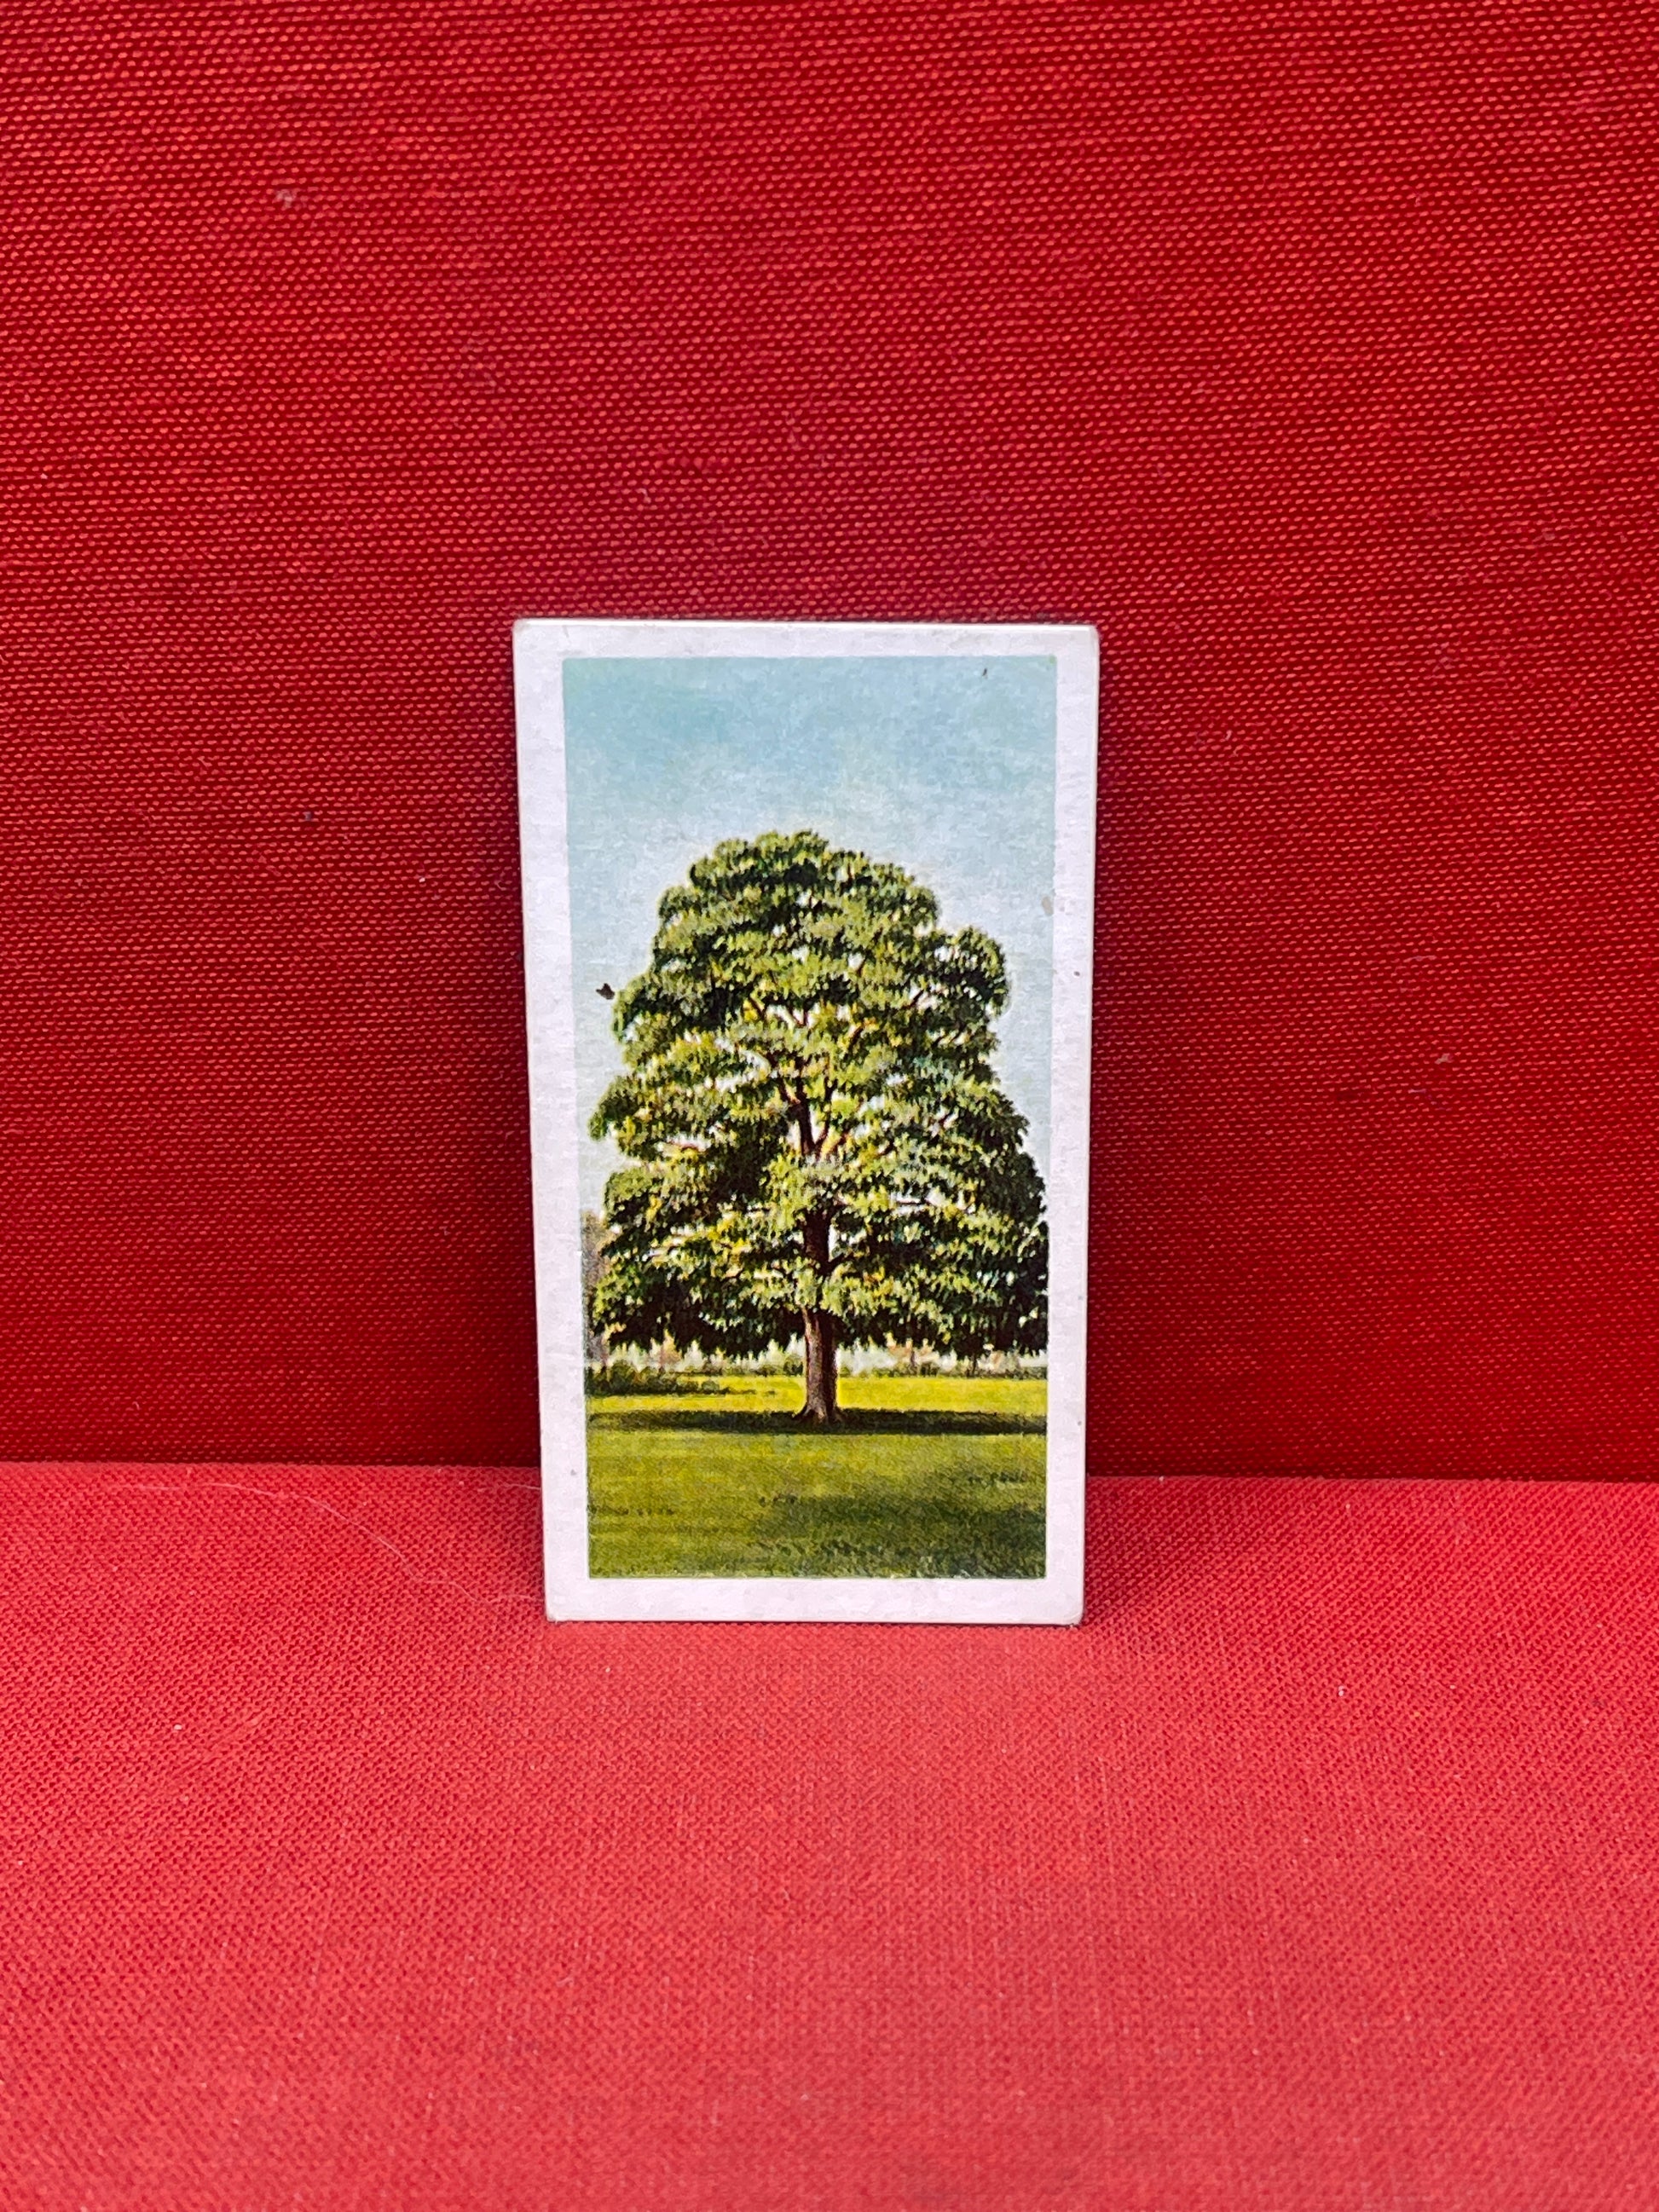 Brooke Bond Tea Collectors Cards Trees In Britain